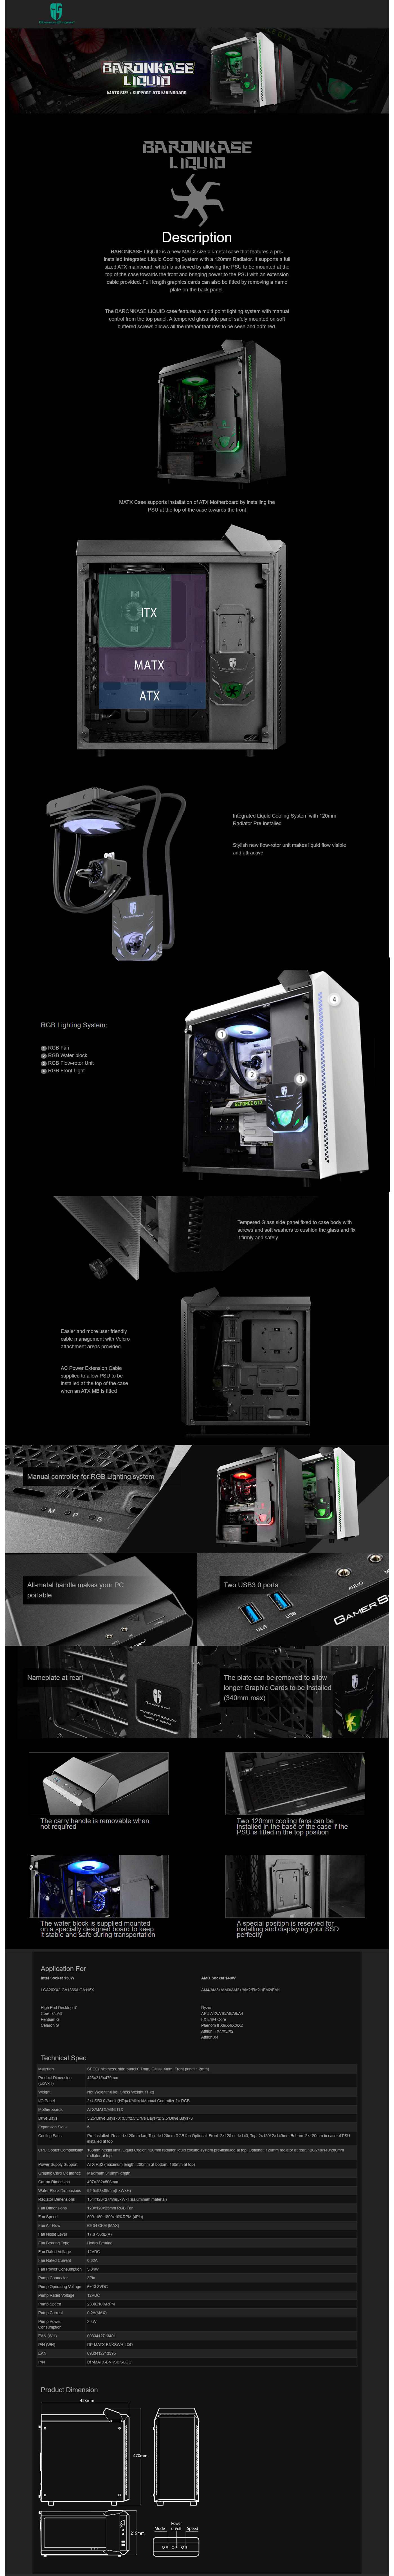 Buy Online Deepcool BARONKASE LIQUID Case with 120MM Liquid Cooling - Black